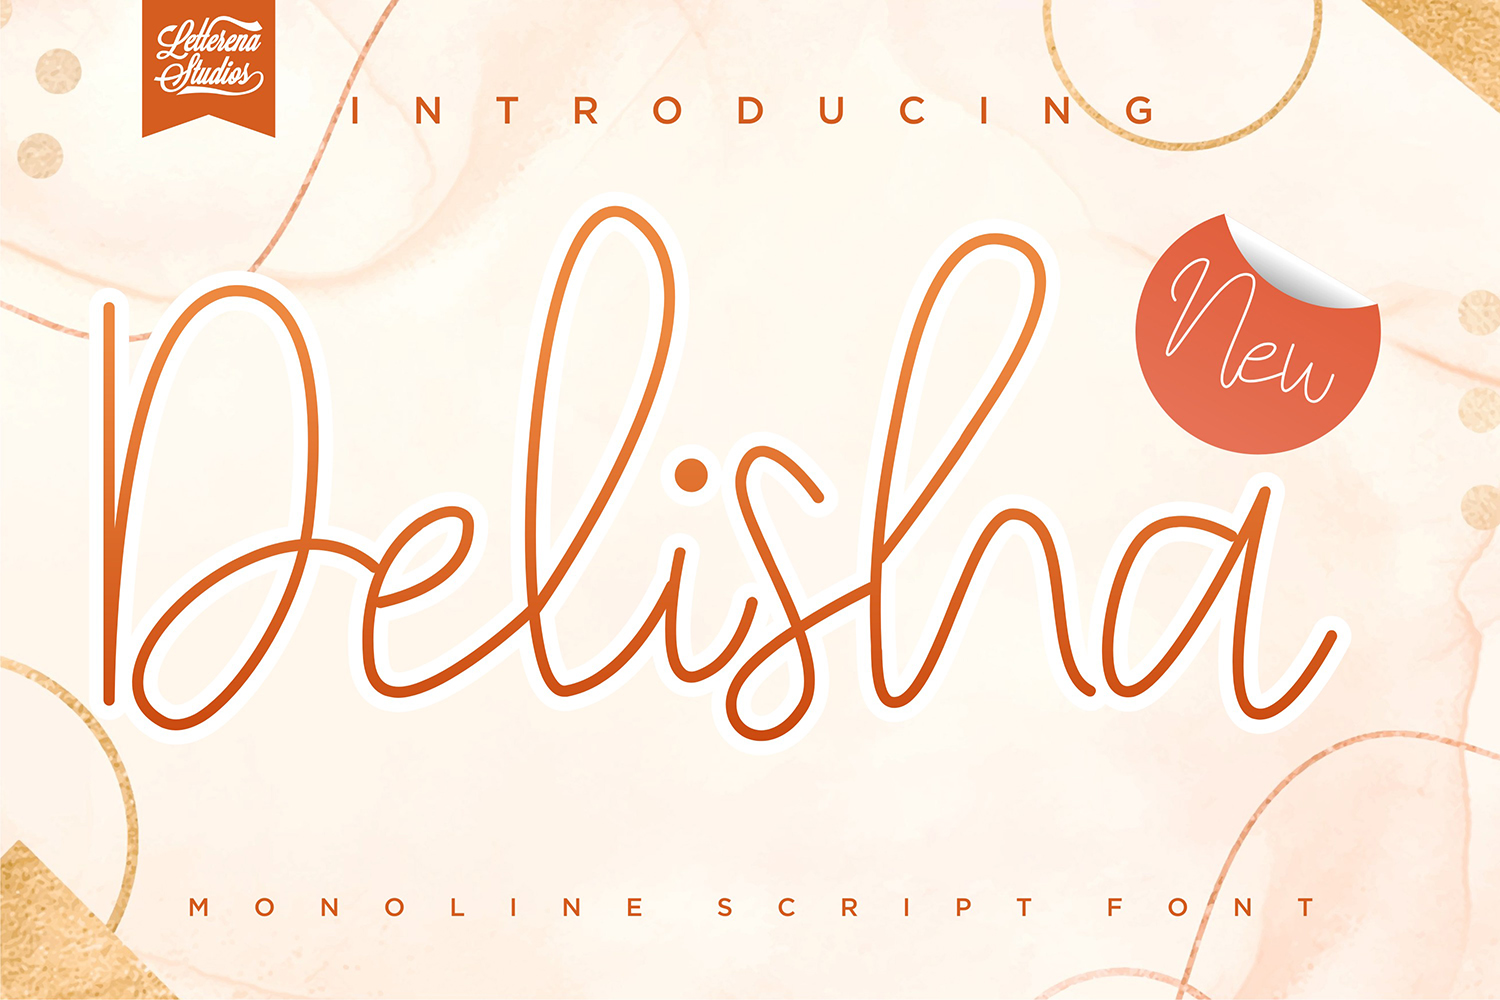 Delisha Free Font